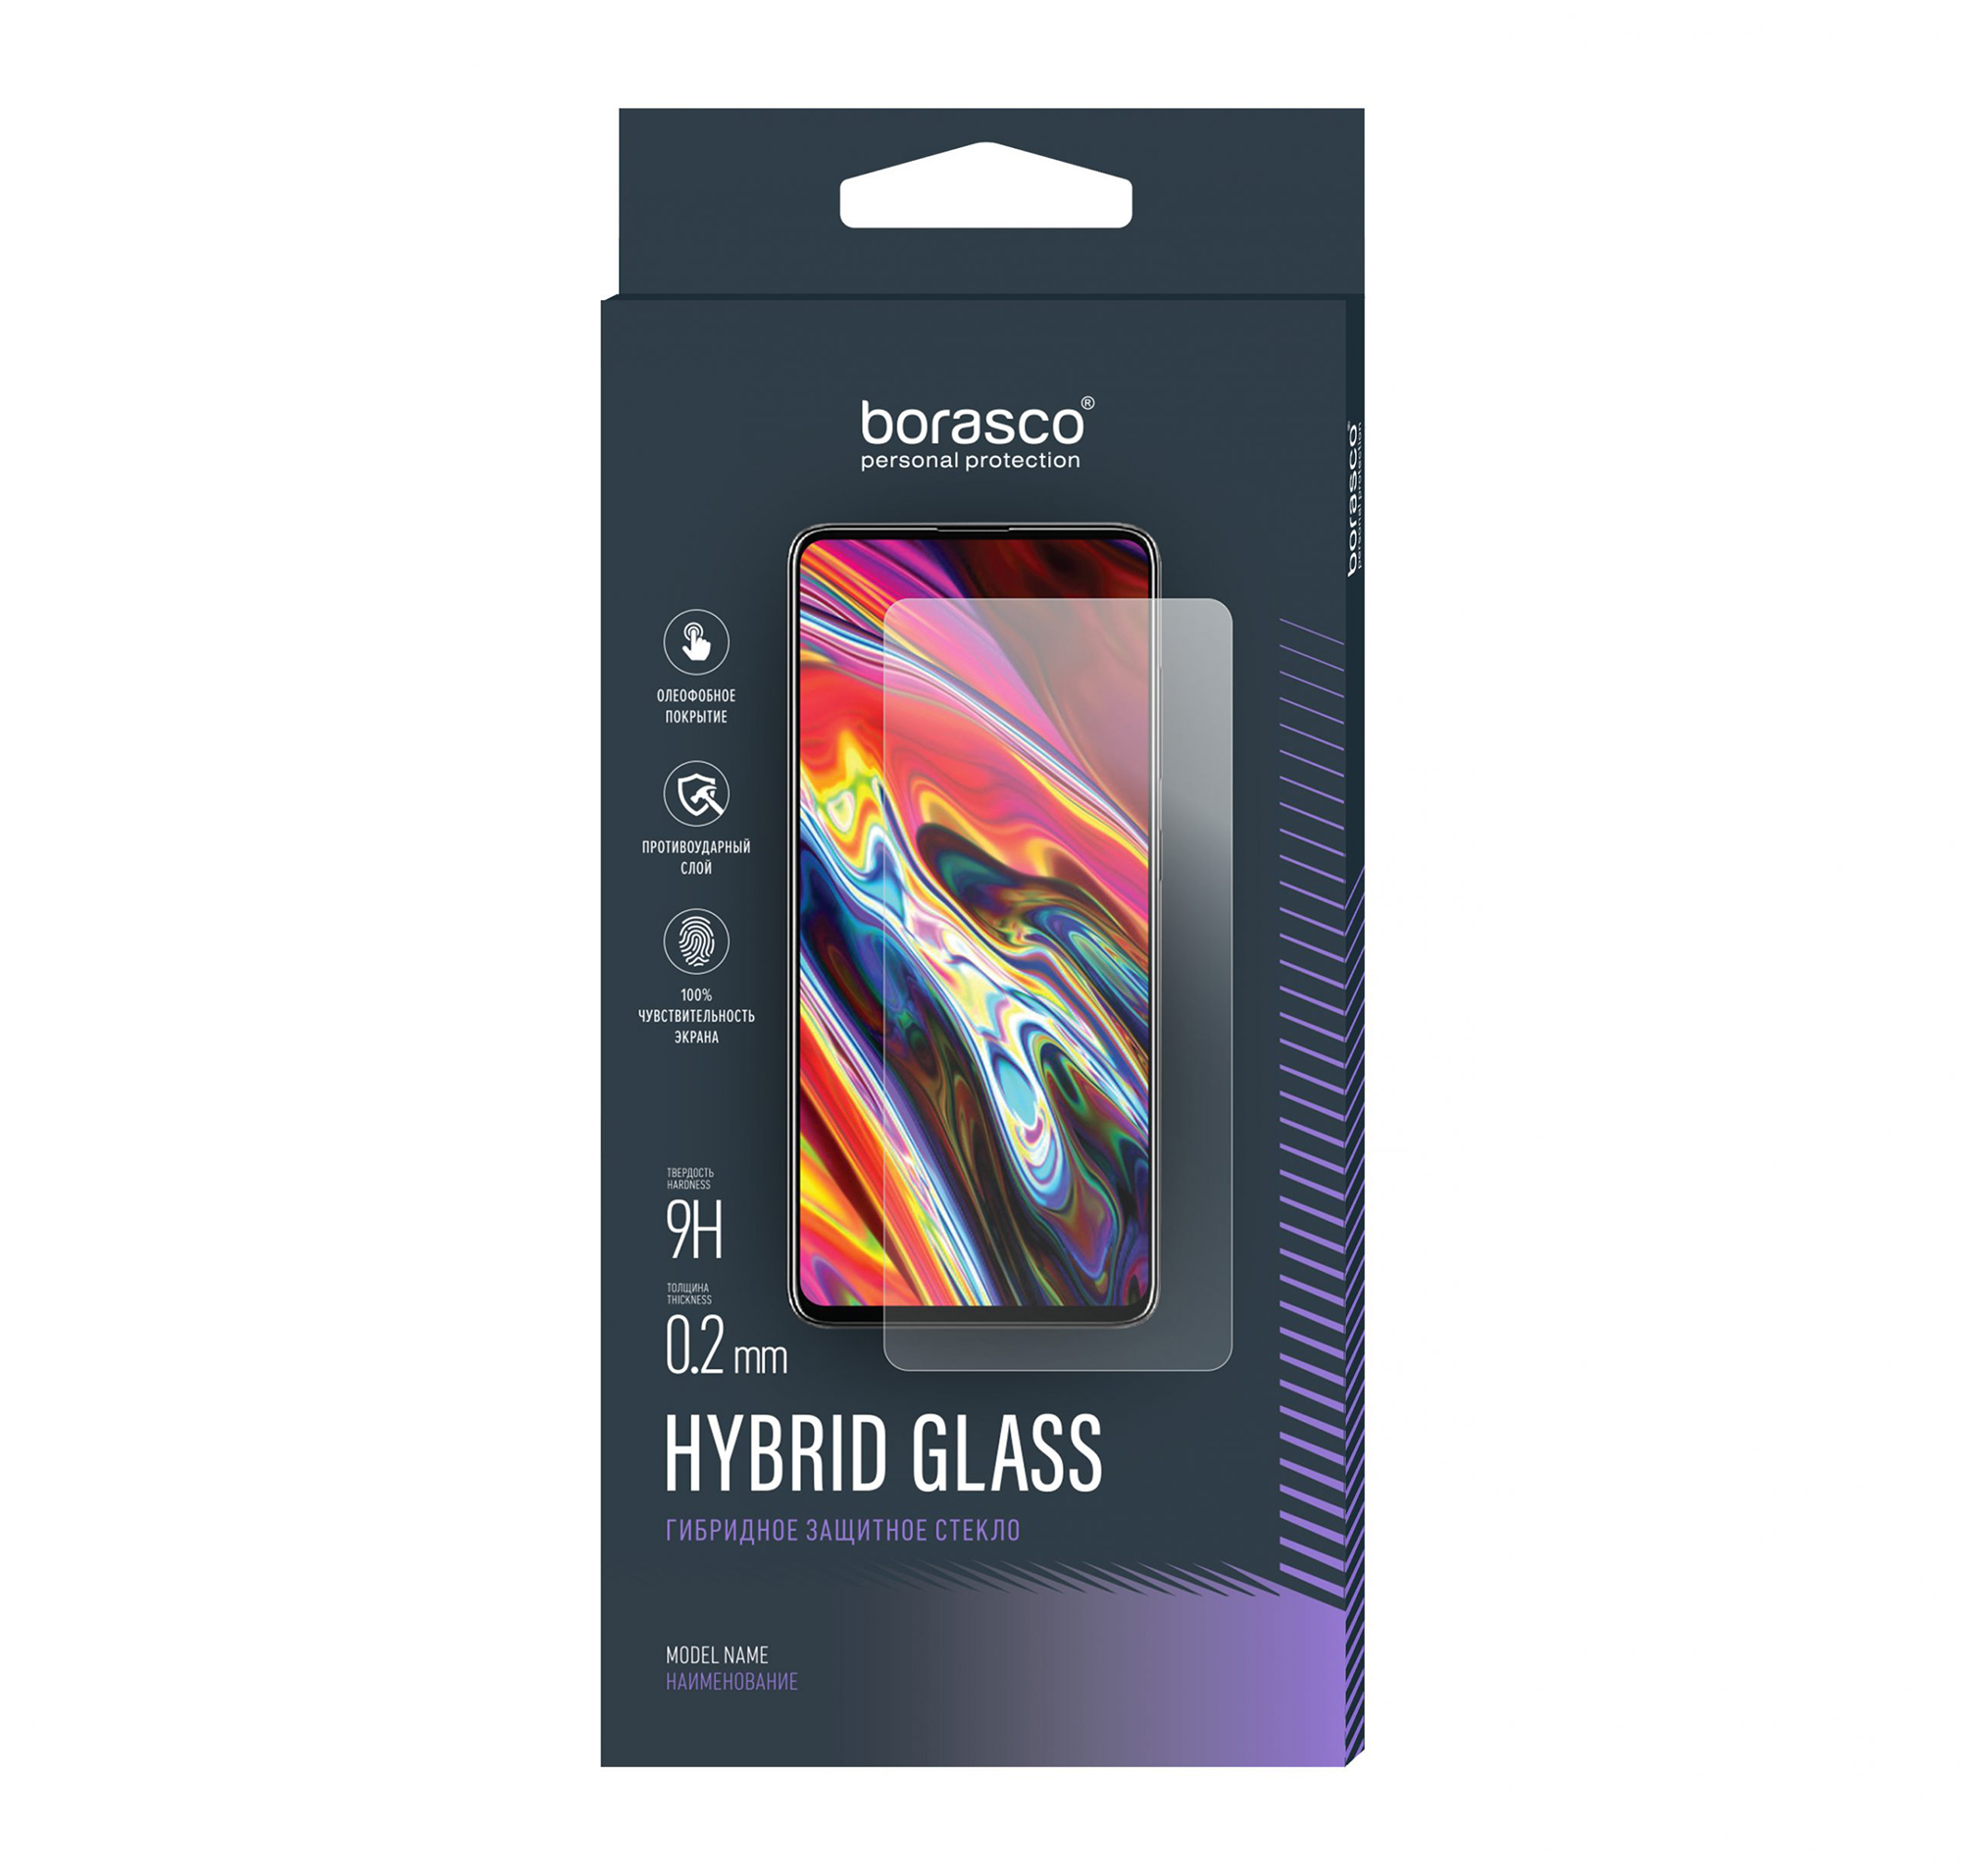 Защитное стекло Hybrid Glass для Huawei MediaPad T3 8 for huawei mediapad t5 10 10 1 inch mediapad t3 8 0 t3 10 9 6 inch anti fall hard tablet cover case free stylus